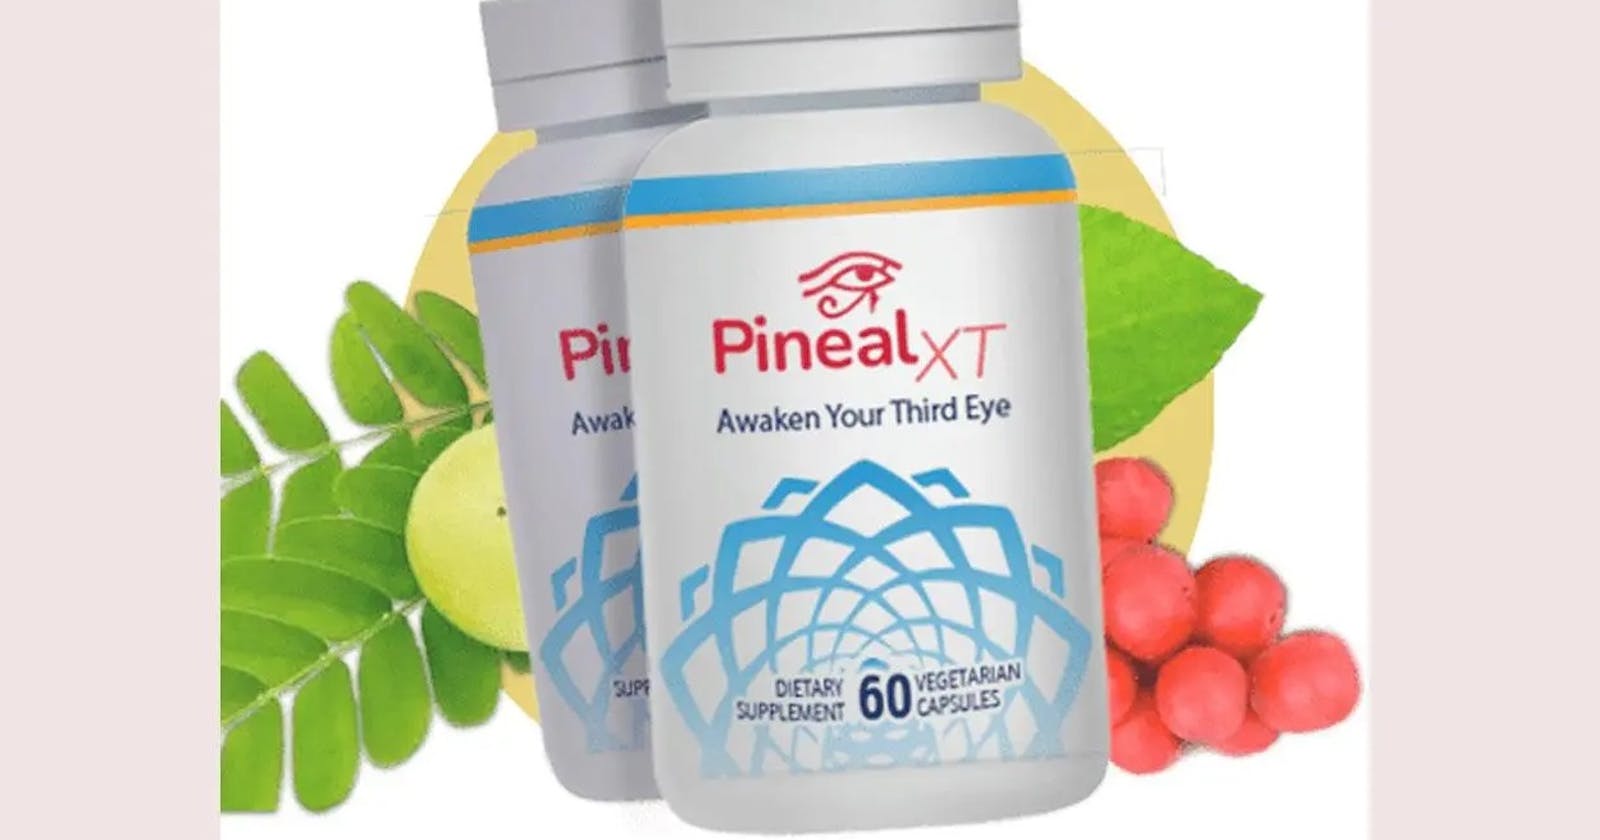 Pineal XT Experience Deep Sleep and Enhanced Focus with Pineal XT!